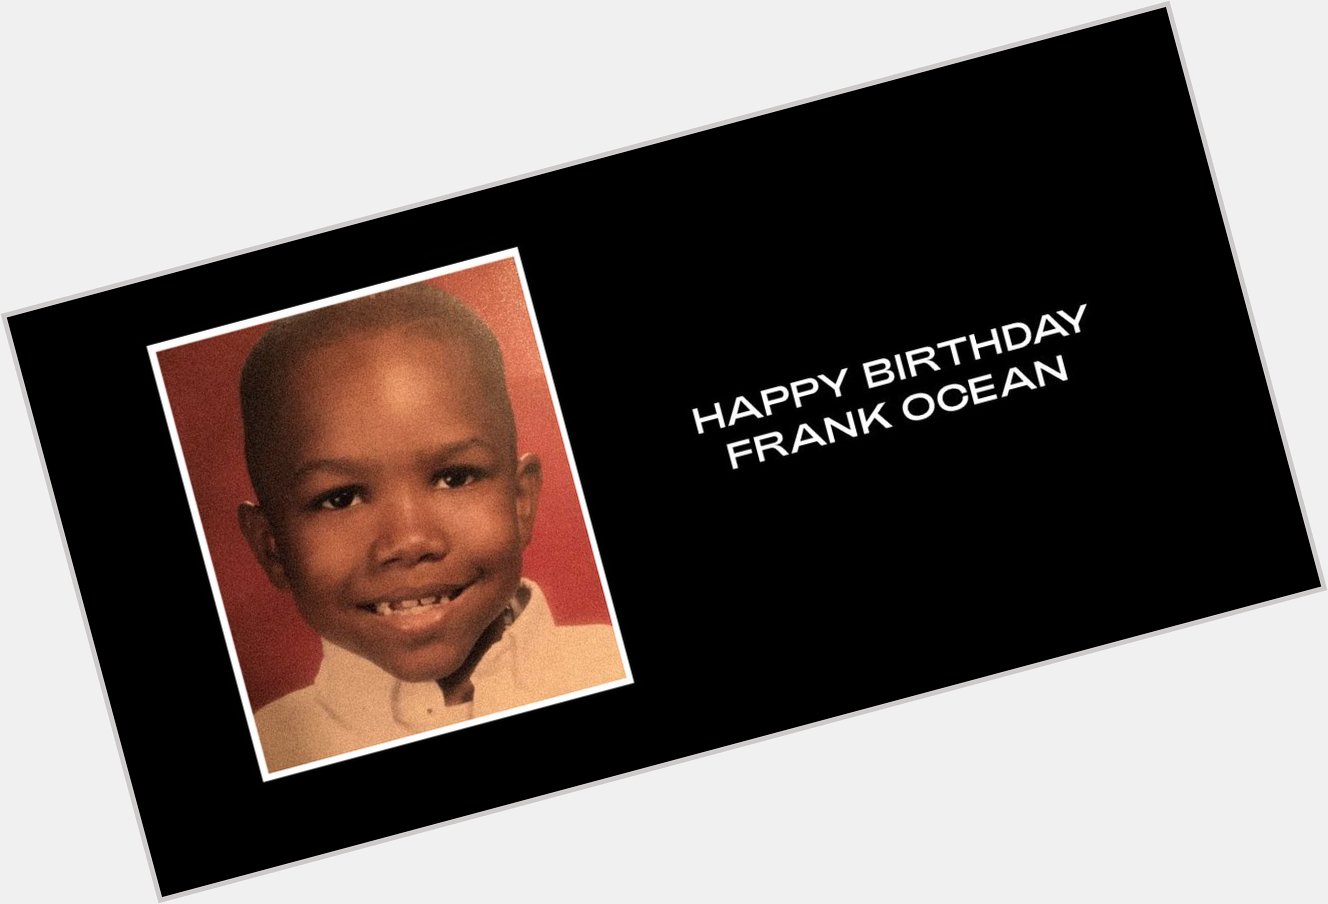  Happy Birthday Frank Ocean, Gabrielle Union & Tracee Ellis Ross  